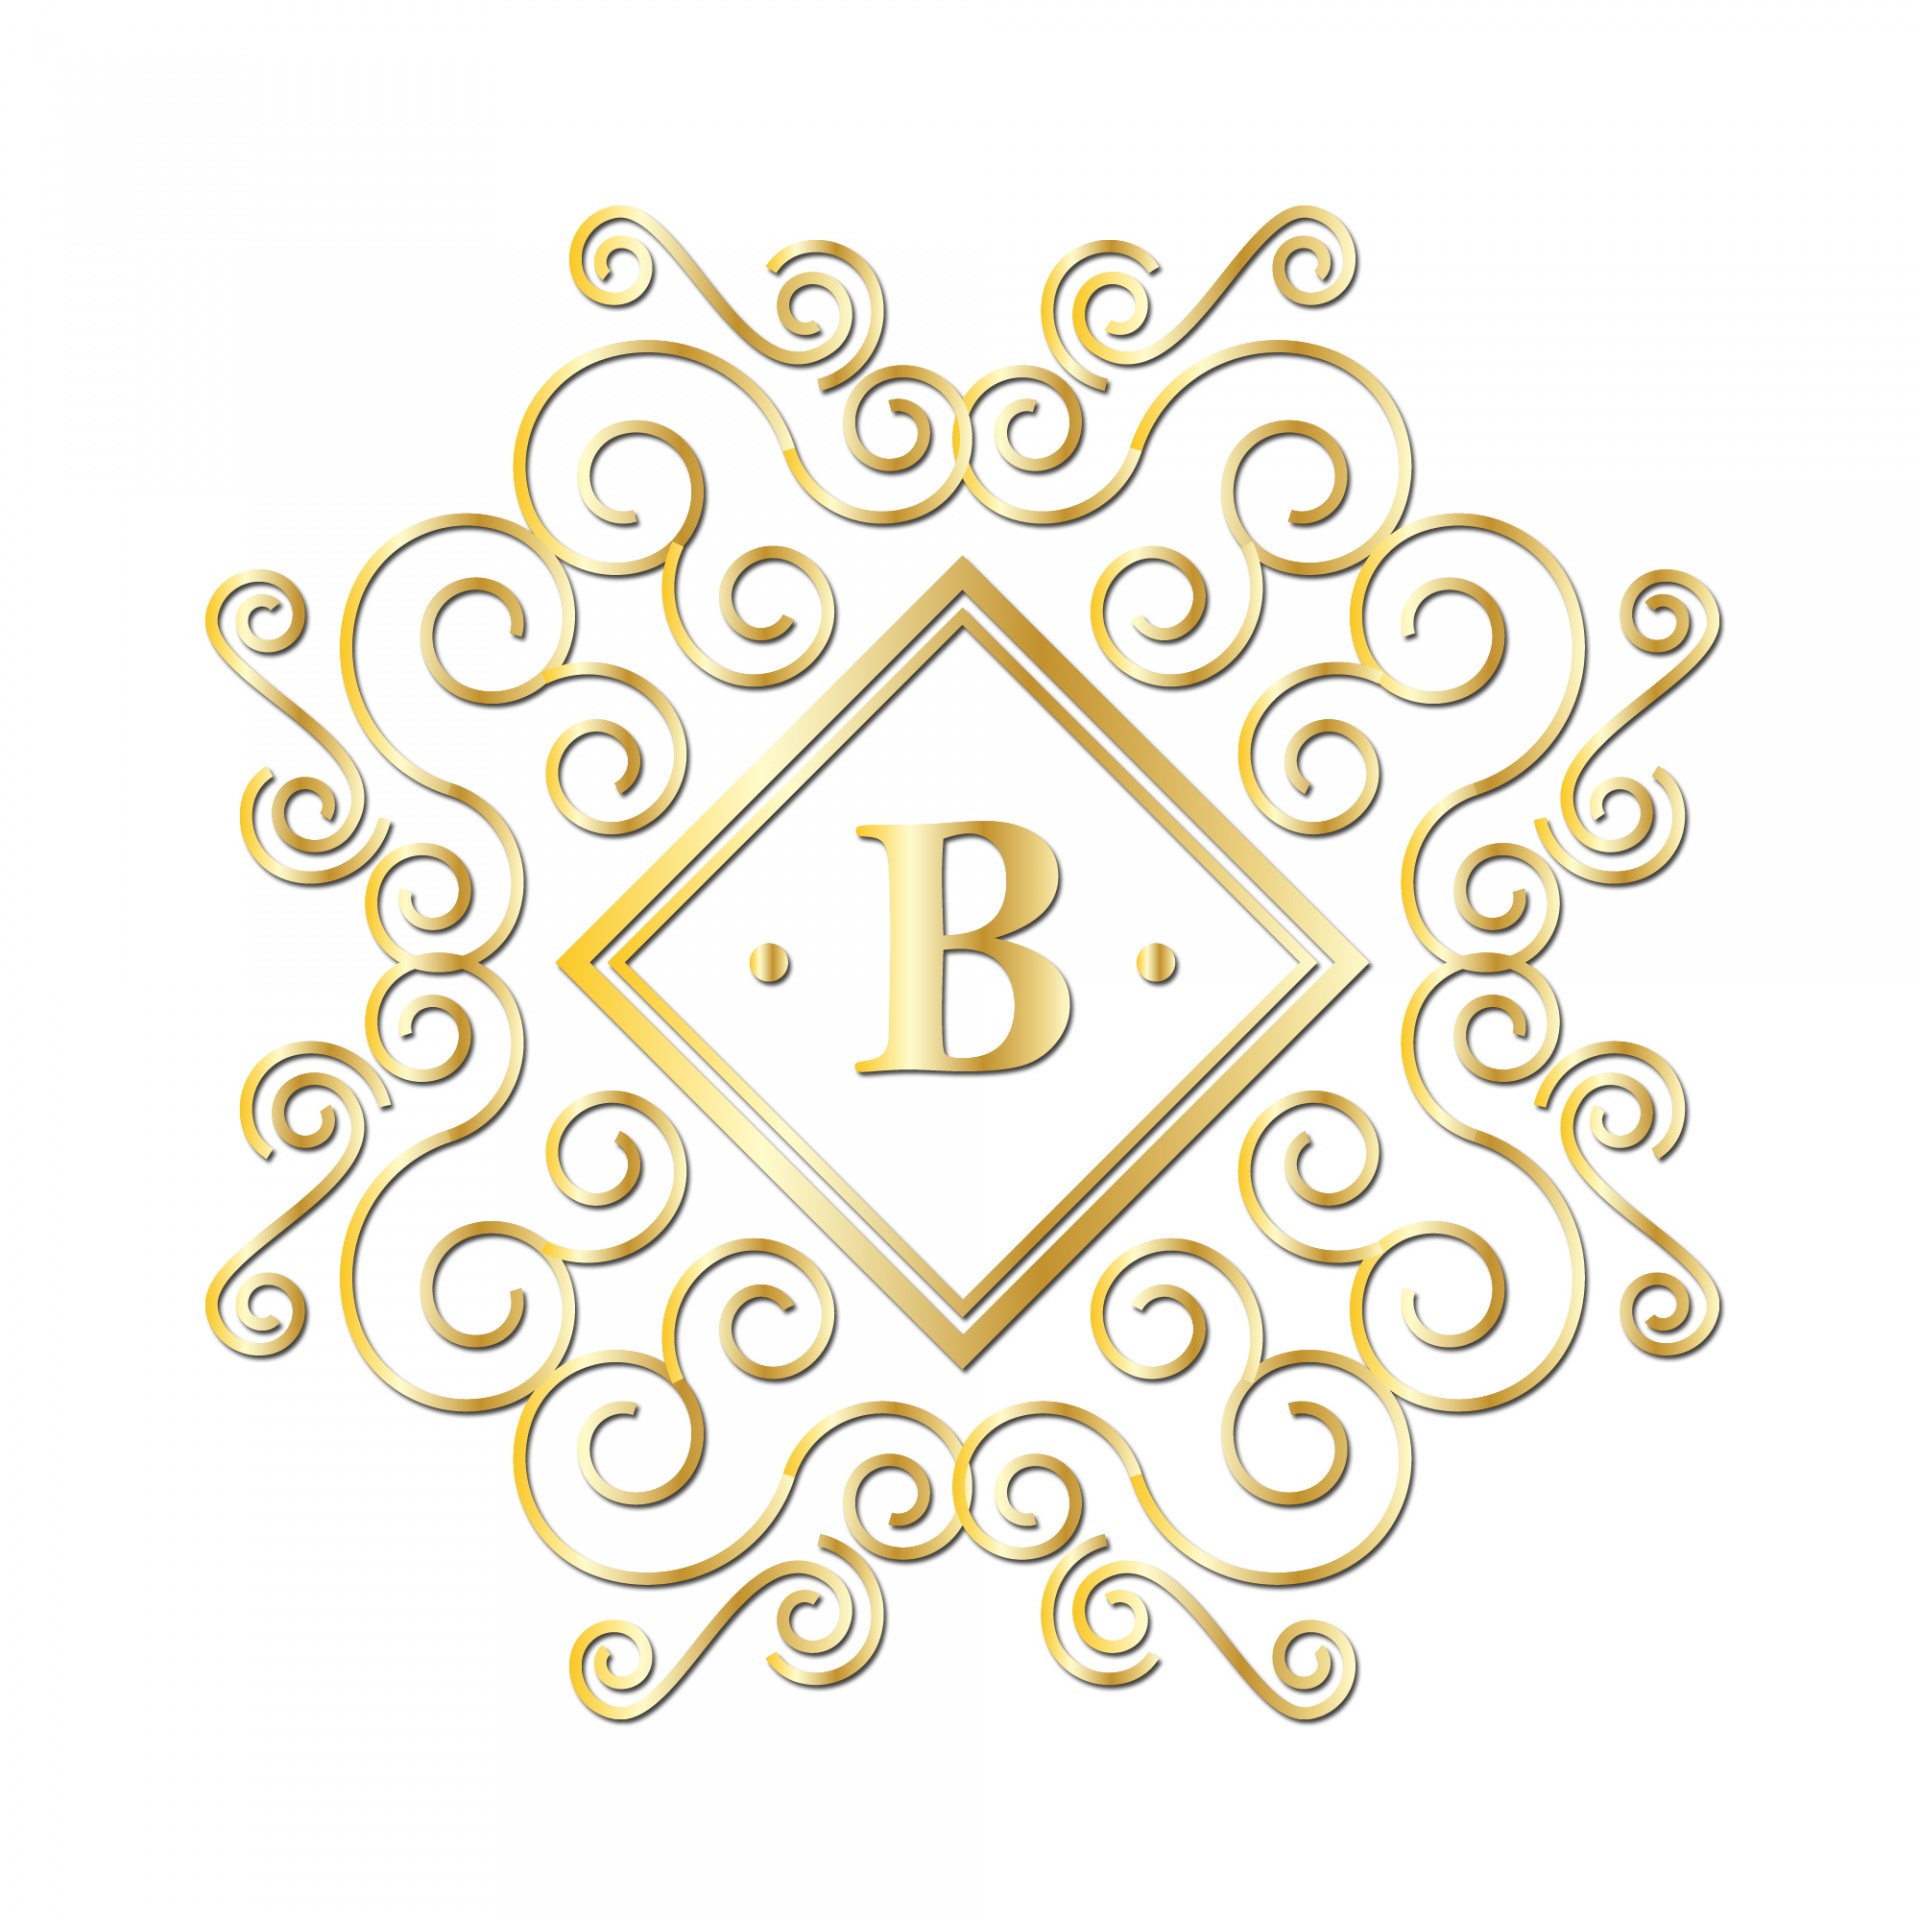 Fancy golden initial letter B on white background